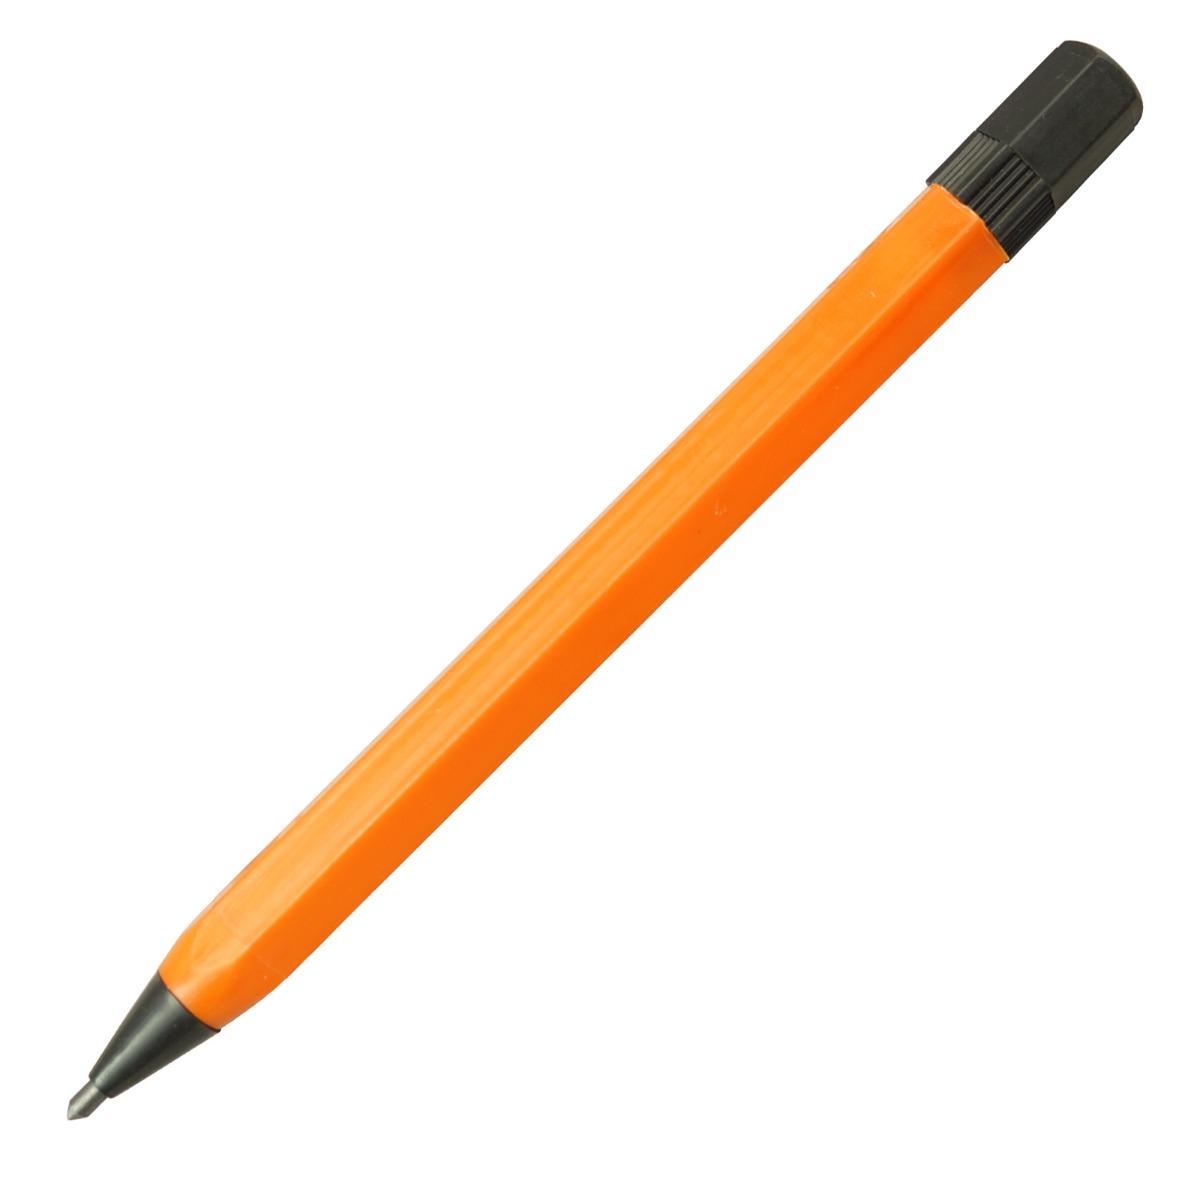  Penhouse Model No :17072 2.0 mm   Orange Color Body Twist Type Tip Pencil